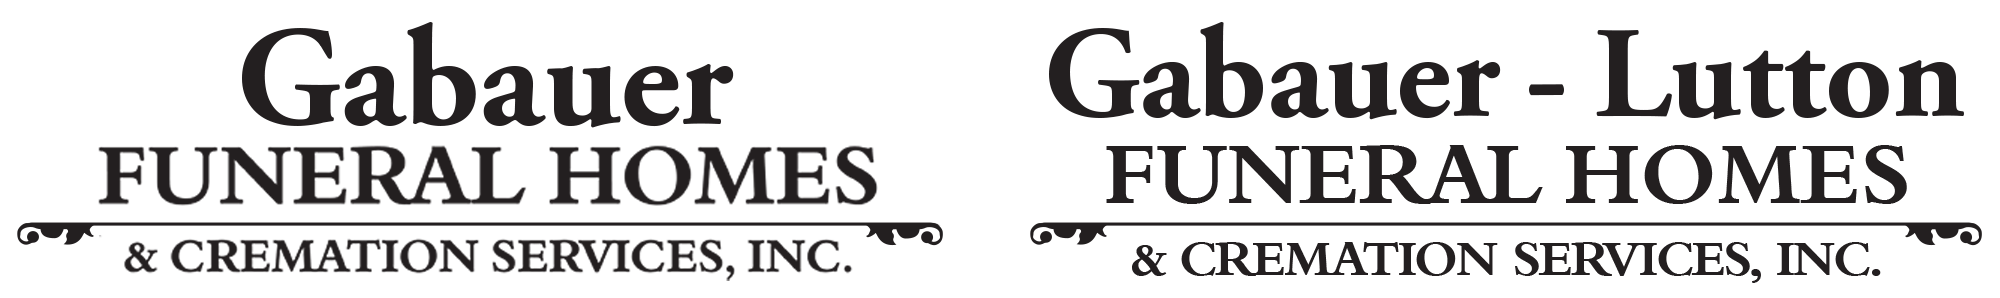 Gabauer-Funeral-Homes-Logos